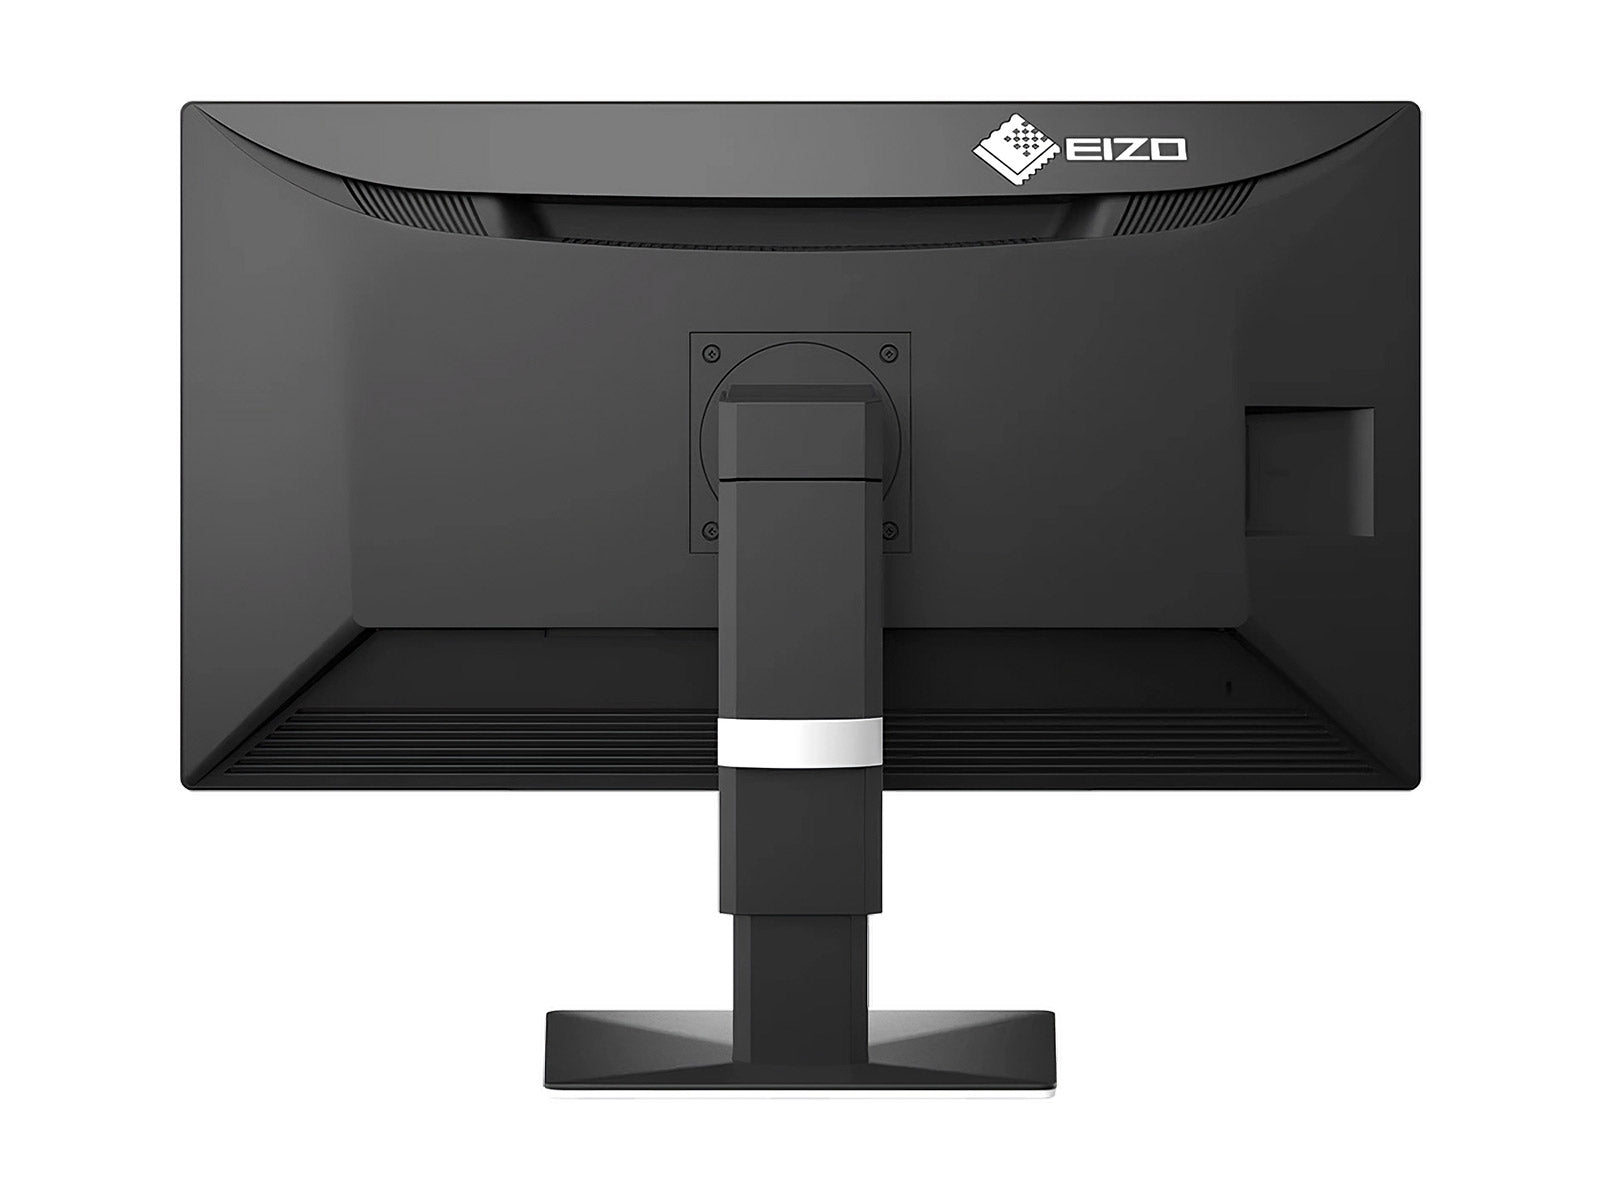 Eizo RadiForce MX317W 8MP 30" Color Clinical Review Display Monitor (MX317W-BK) Monitors.com 